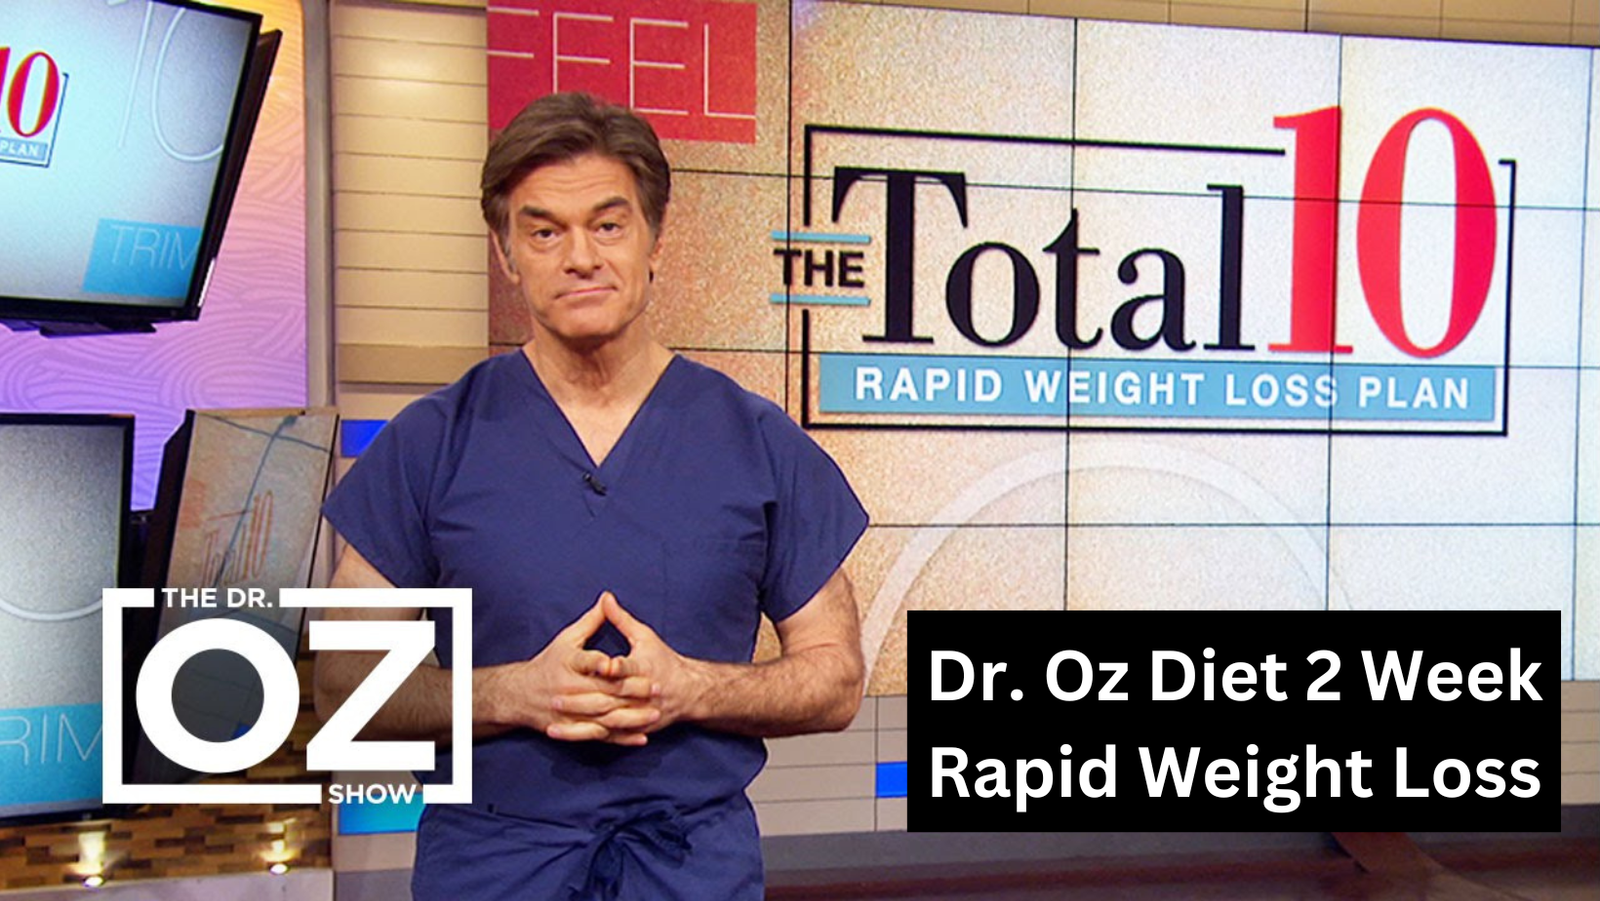 Dr. Oz Diet 2 Week Rapid Weight Loss